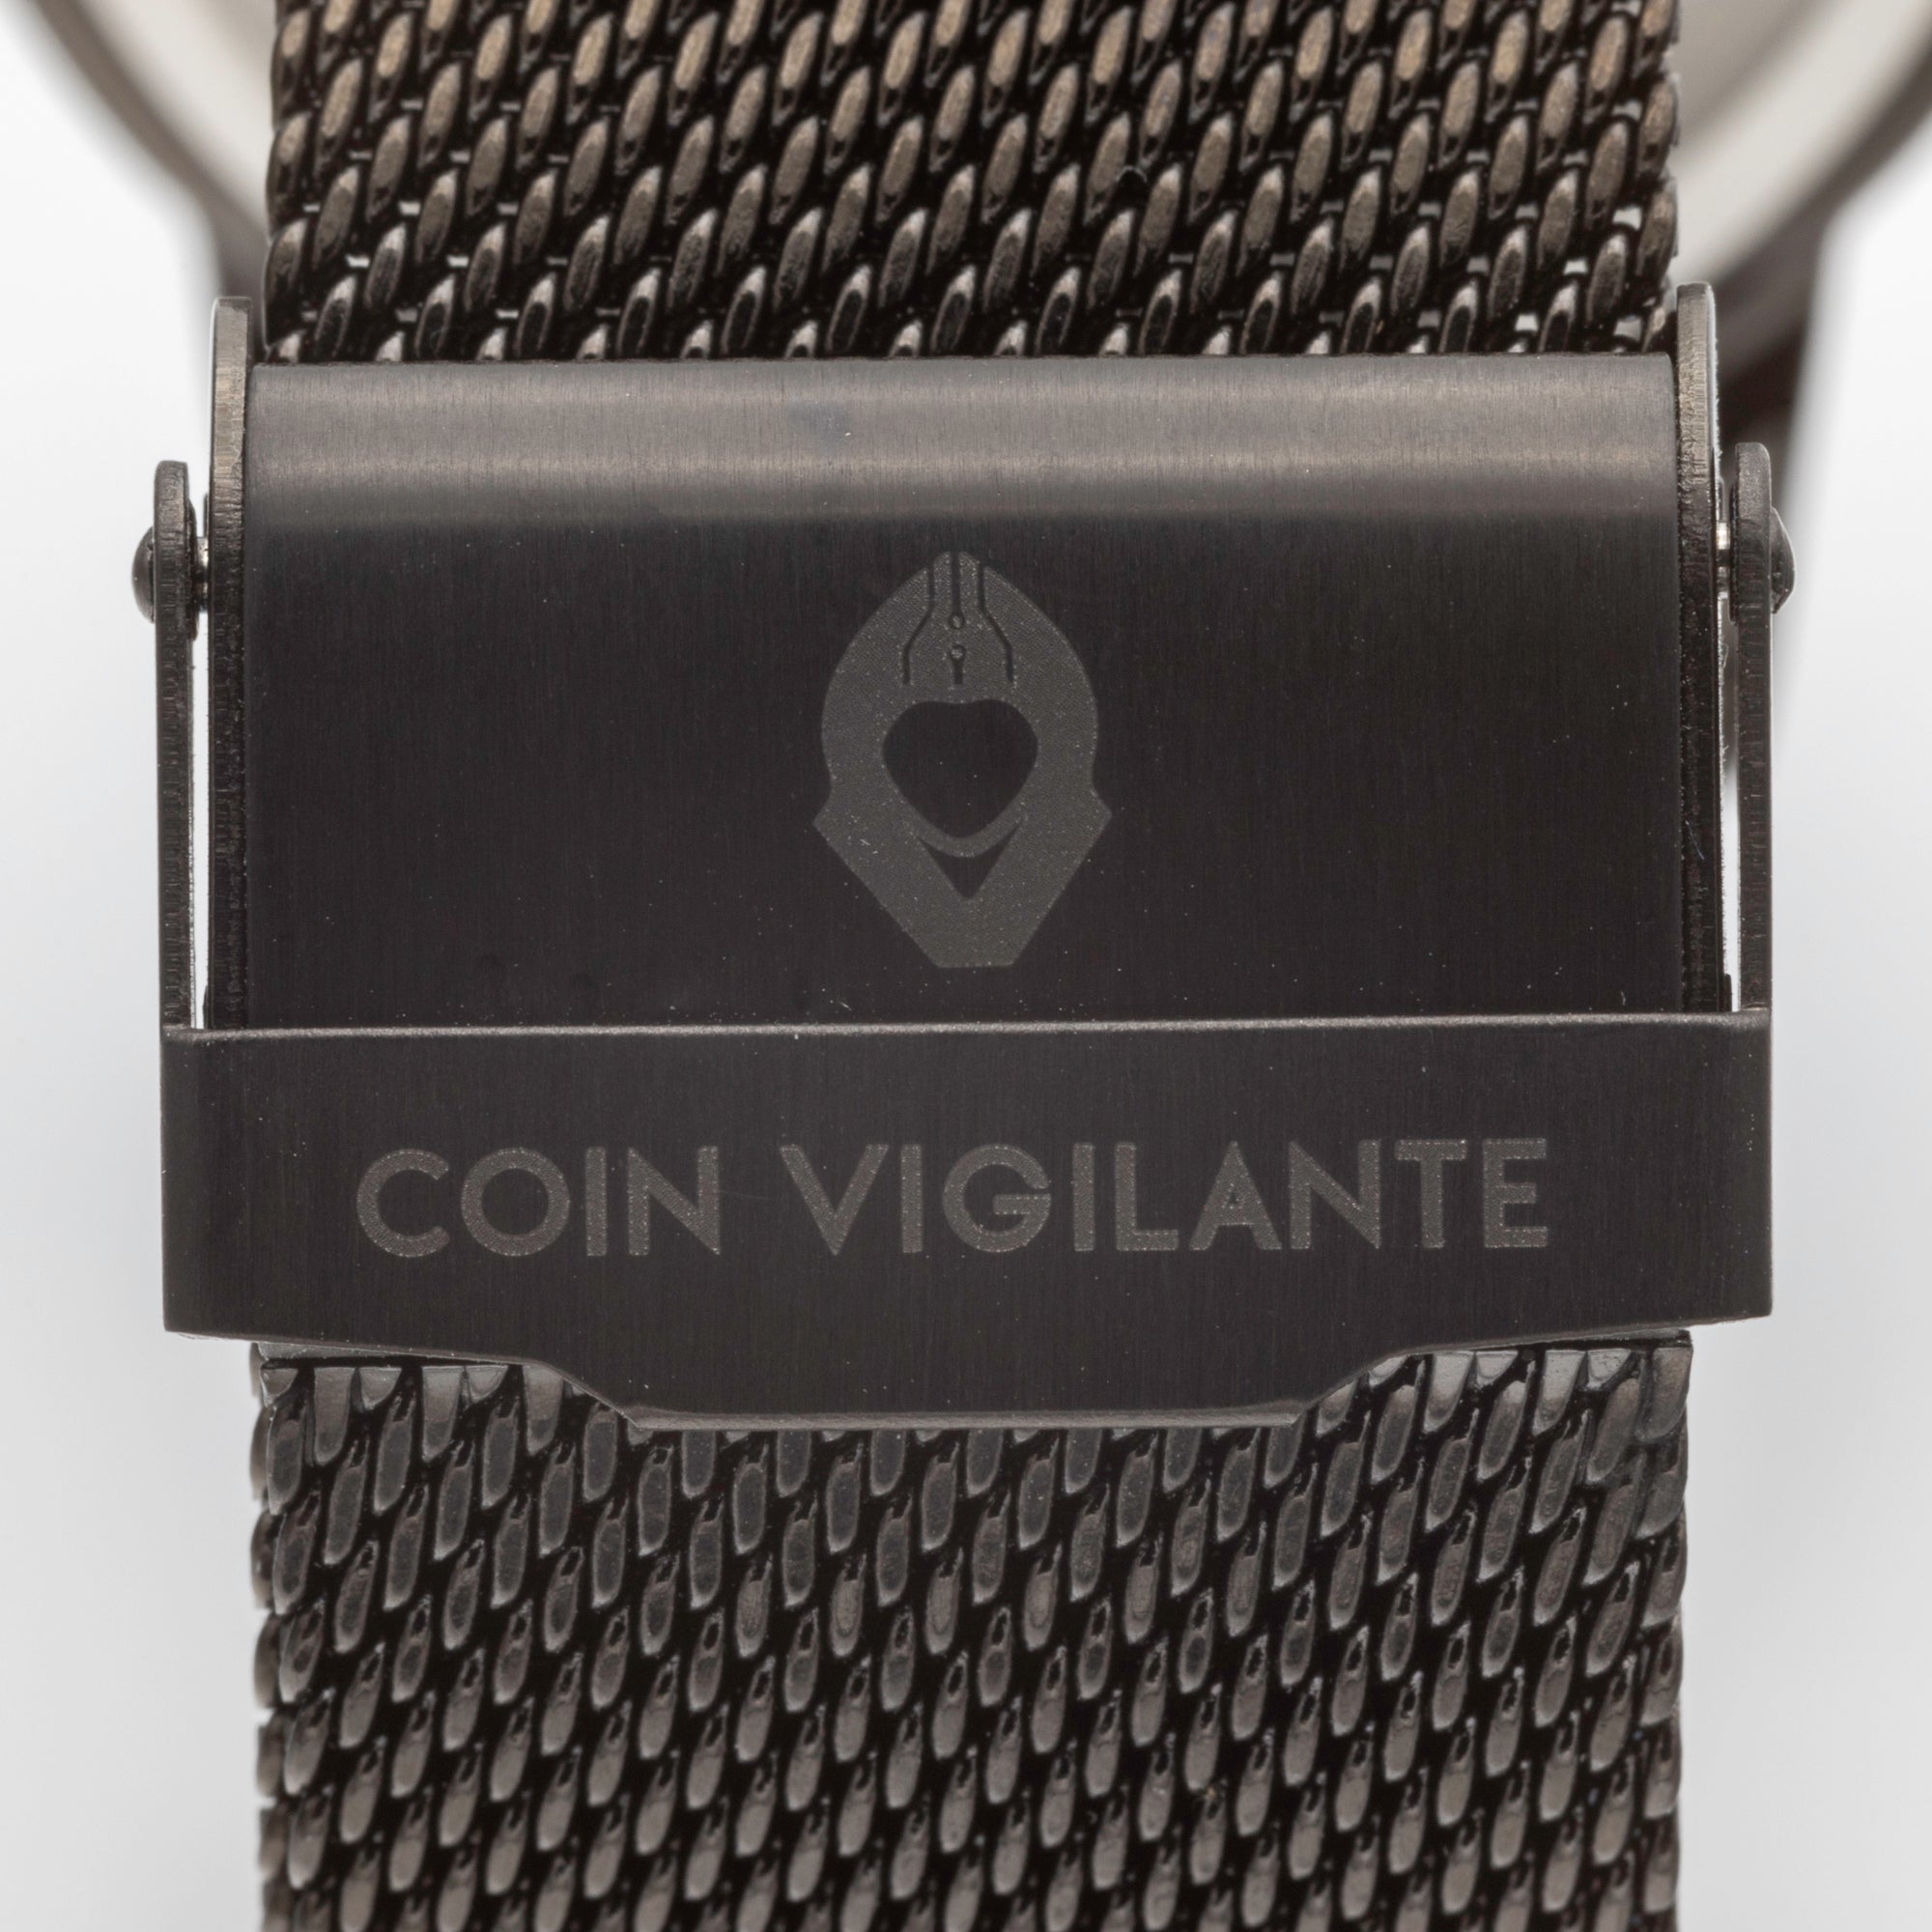 Close-up of Coin Vigilante logo engraved on foldover clasp